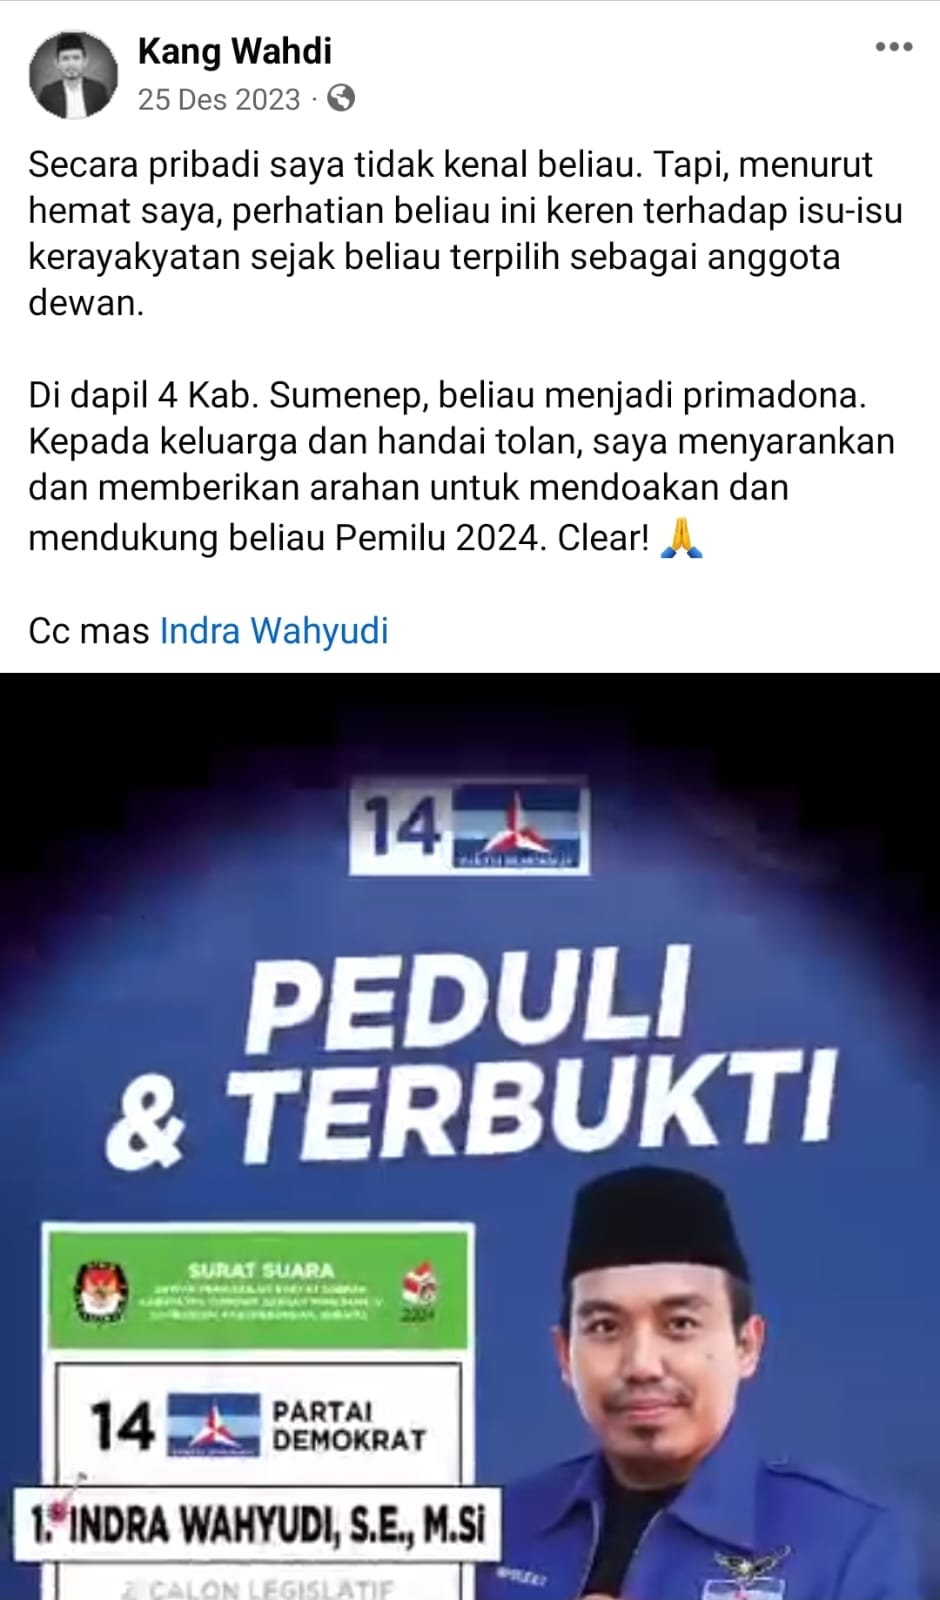 Mantan Aktivis PMII Kang Wahdi Siap Dukung Penuh H. Indra Wahyudi Pemilihan Umum 2024.